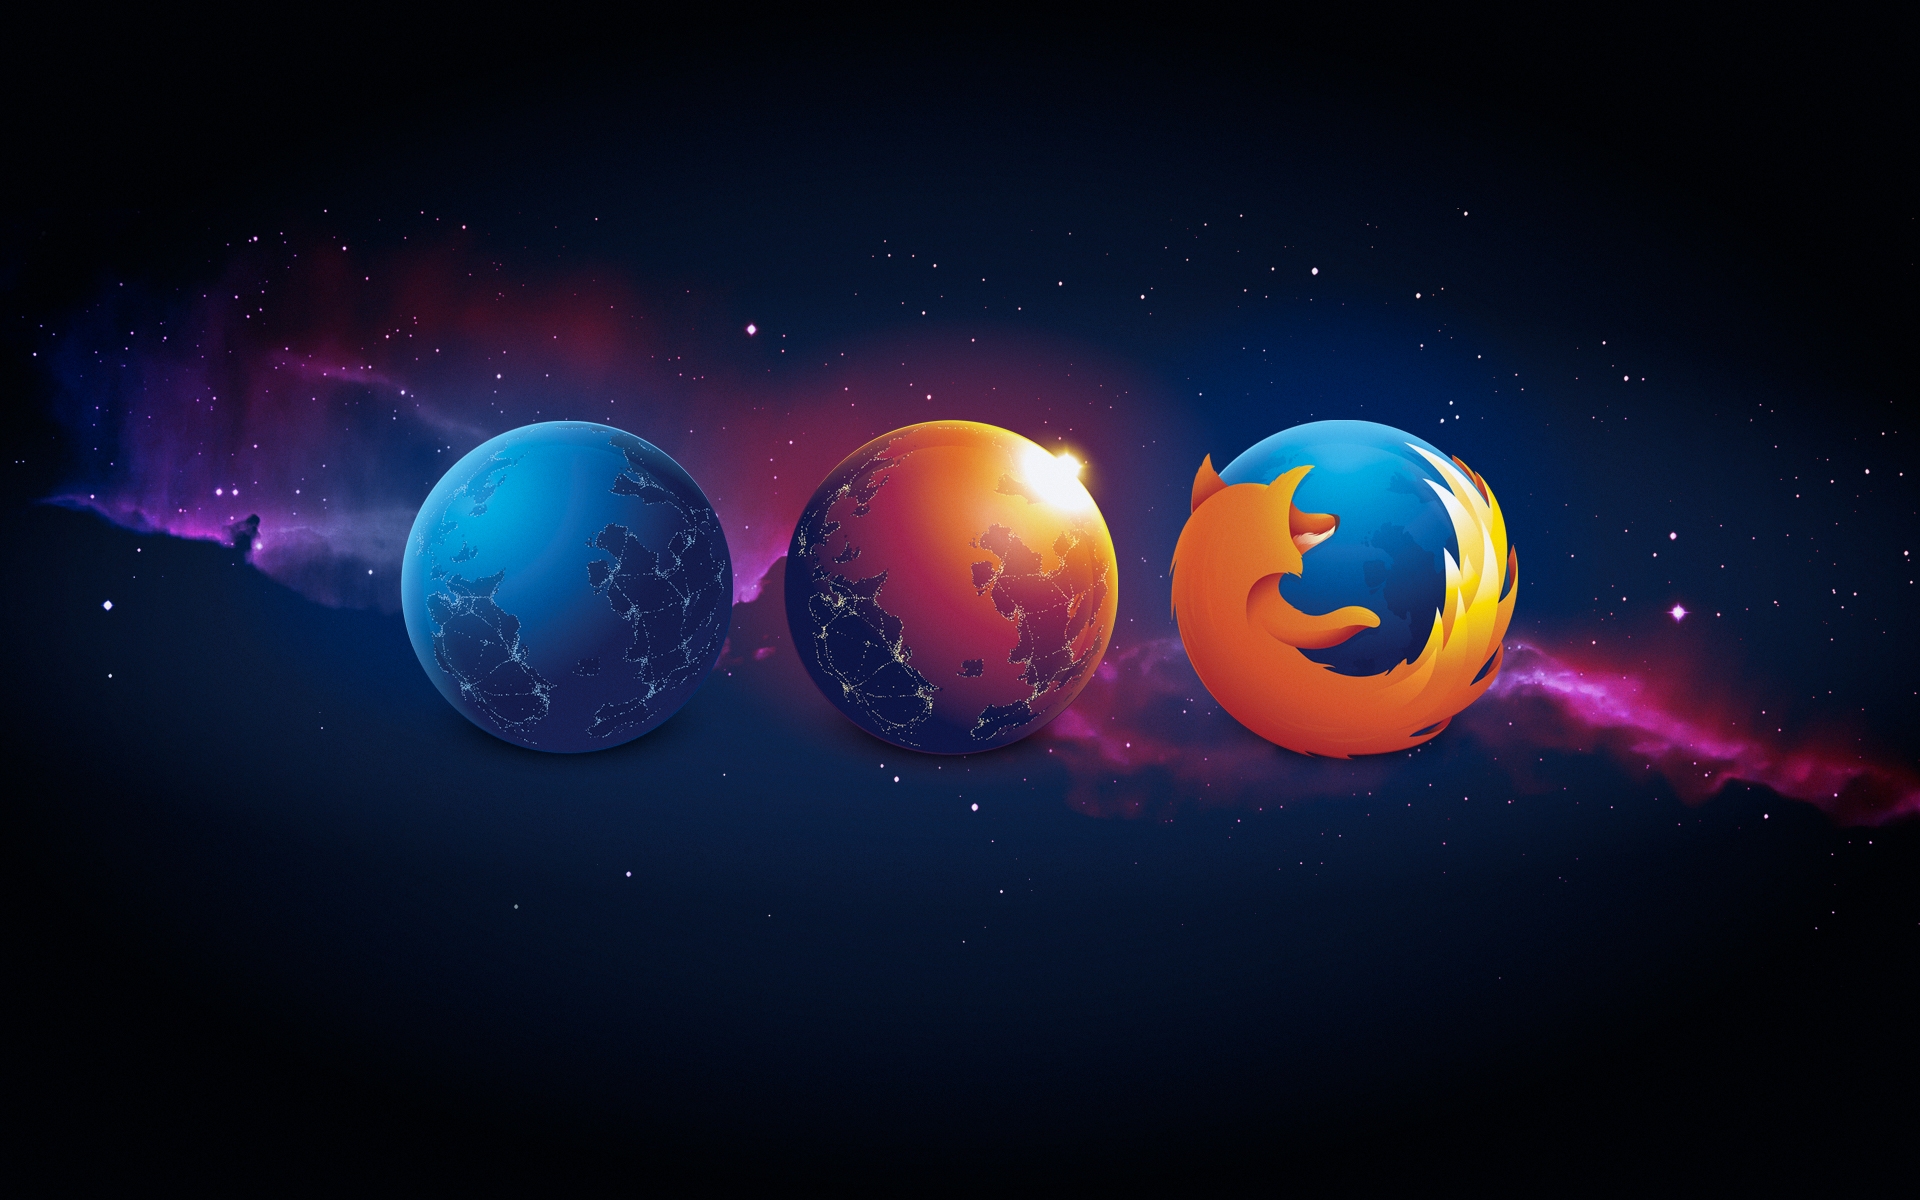 Firefox Nightly Aurora Puter Wallpaper Desktop